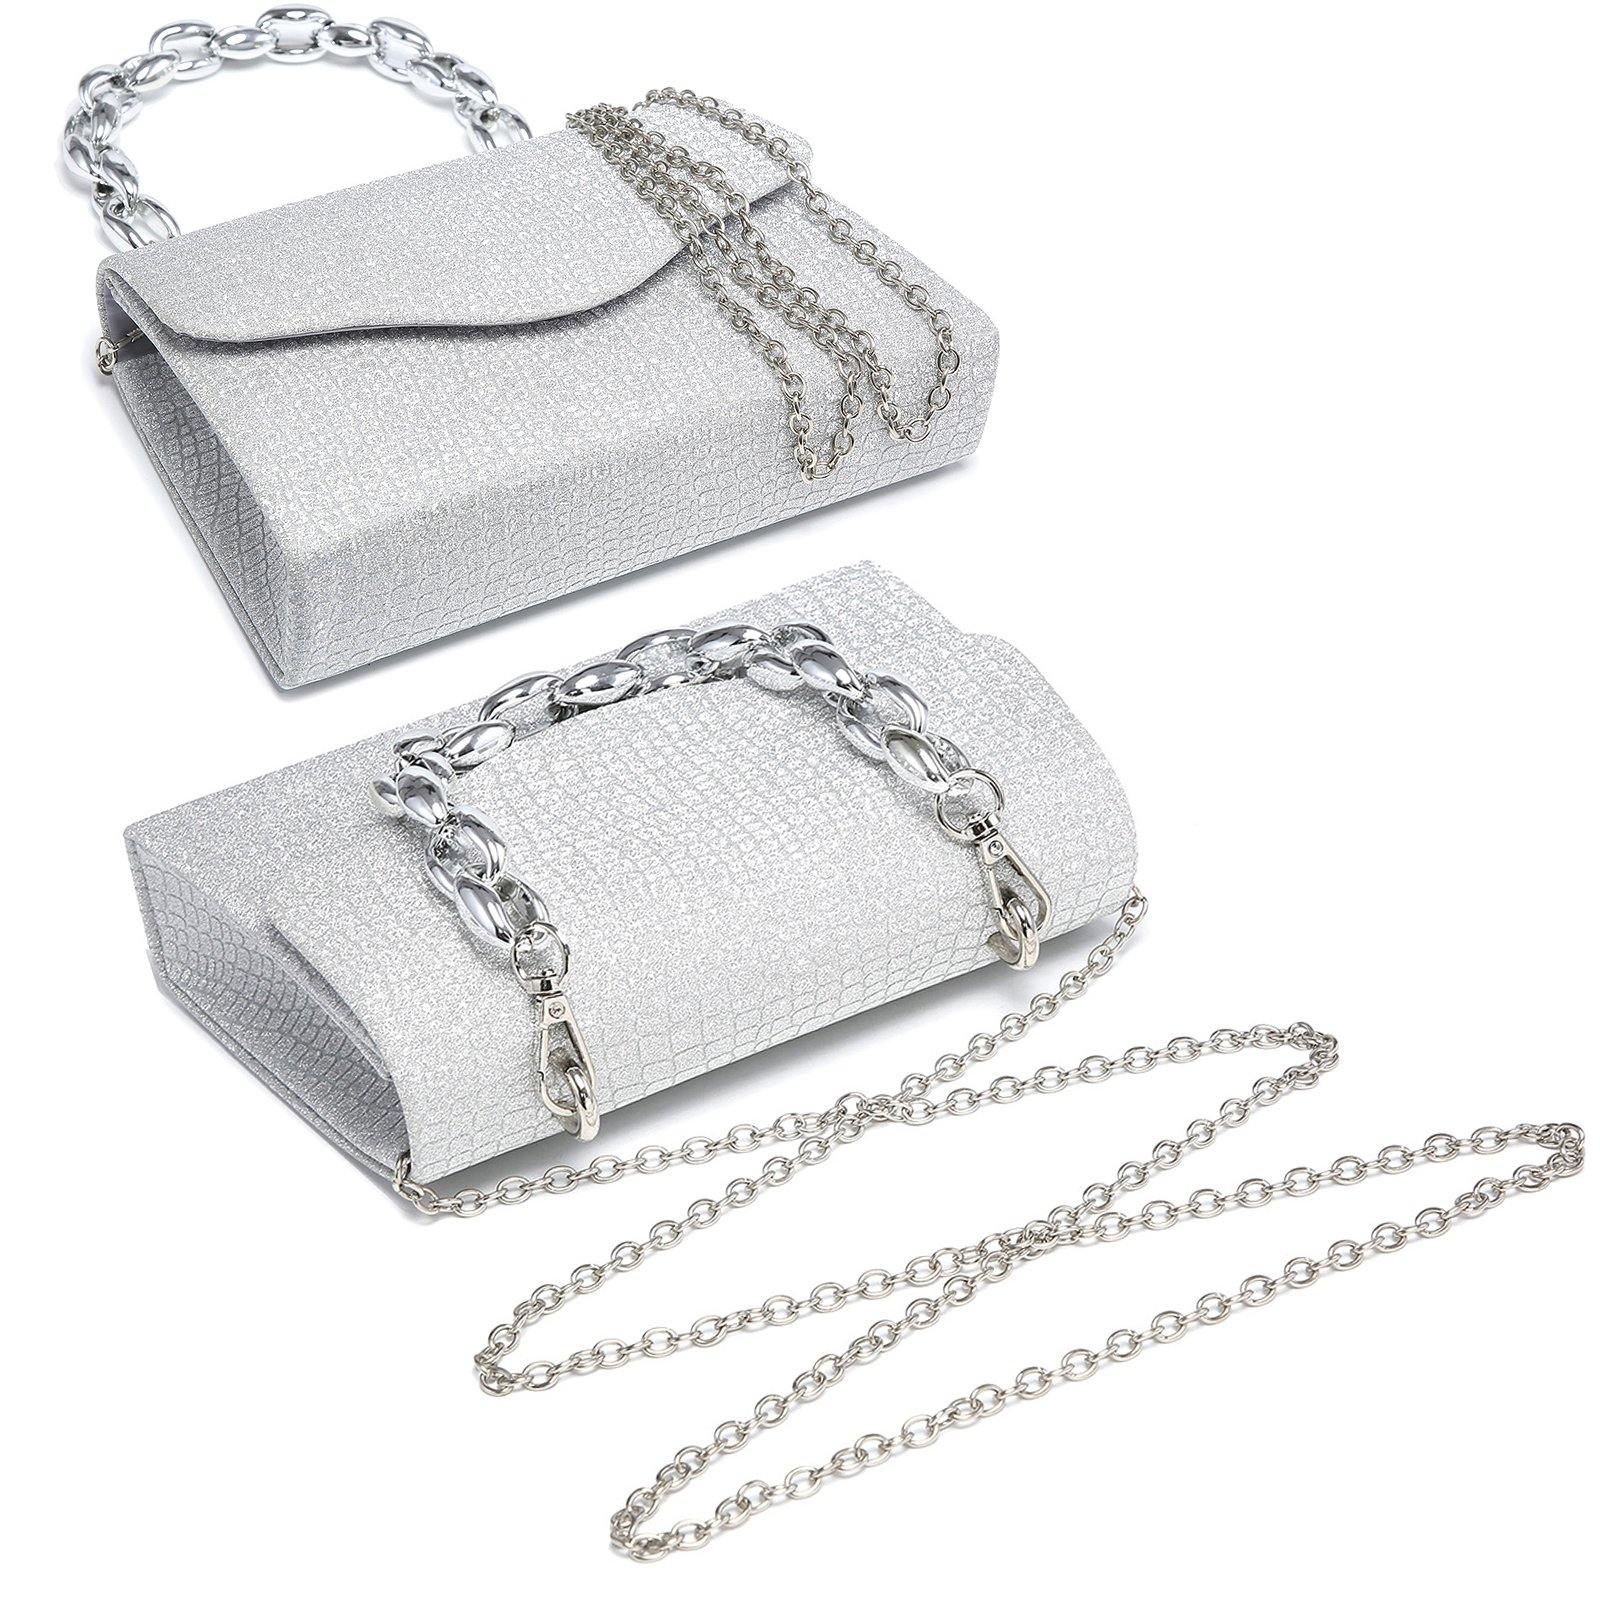 Unique Silver Designer Crystal Bridal Clutch Evening Bag for Brides and  Bridesmaids